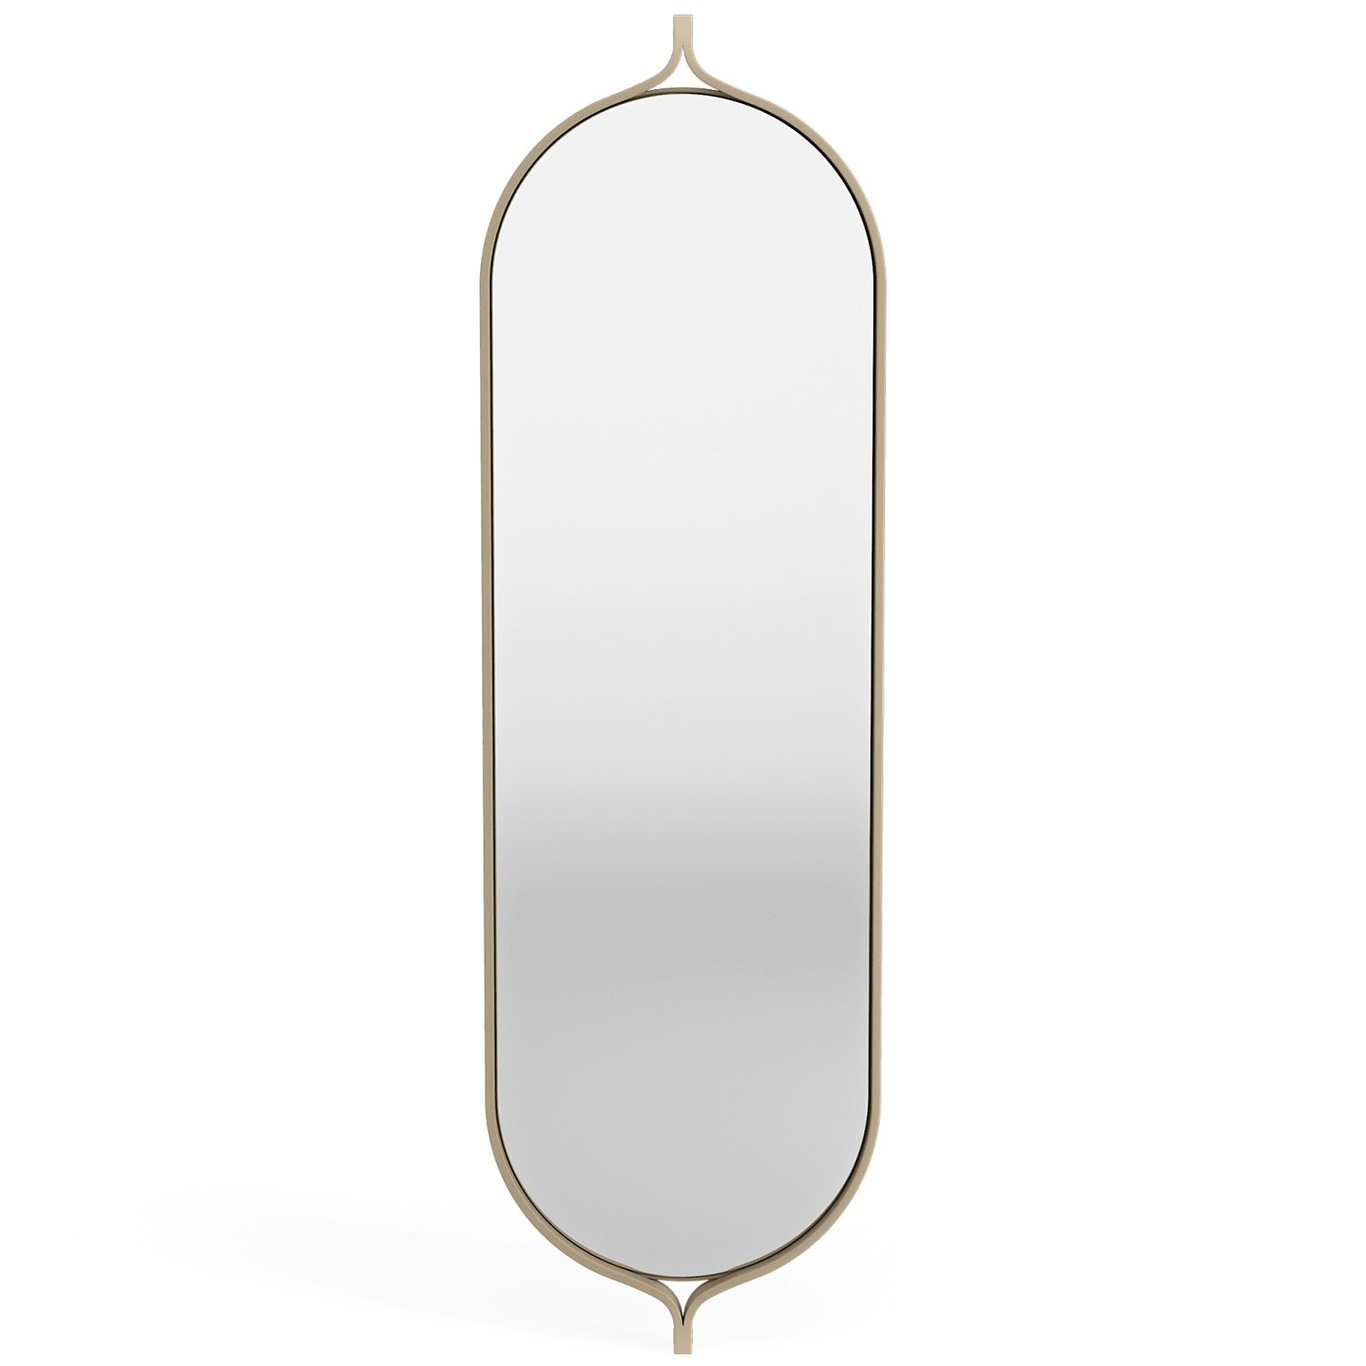 Comma Spegel 135 cm, Nutmeg